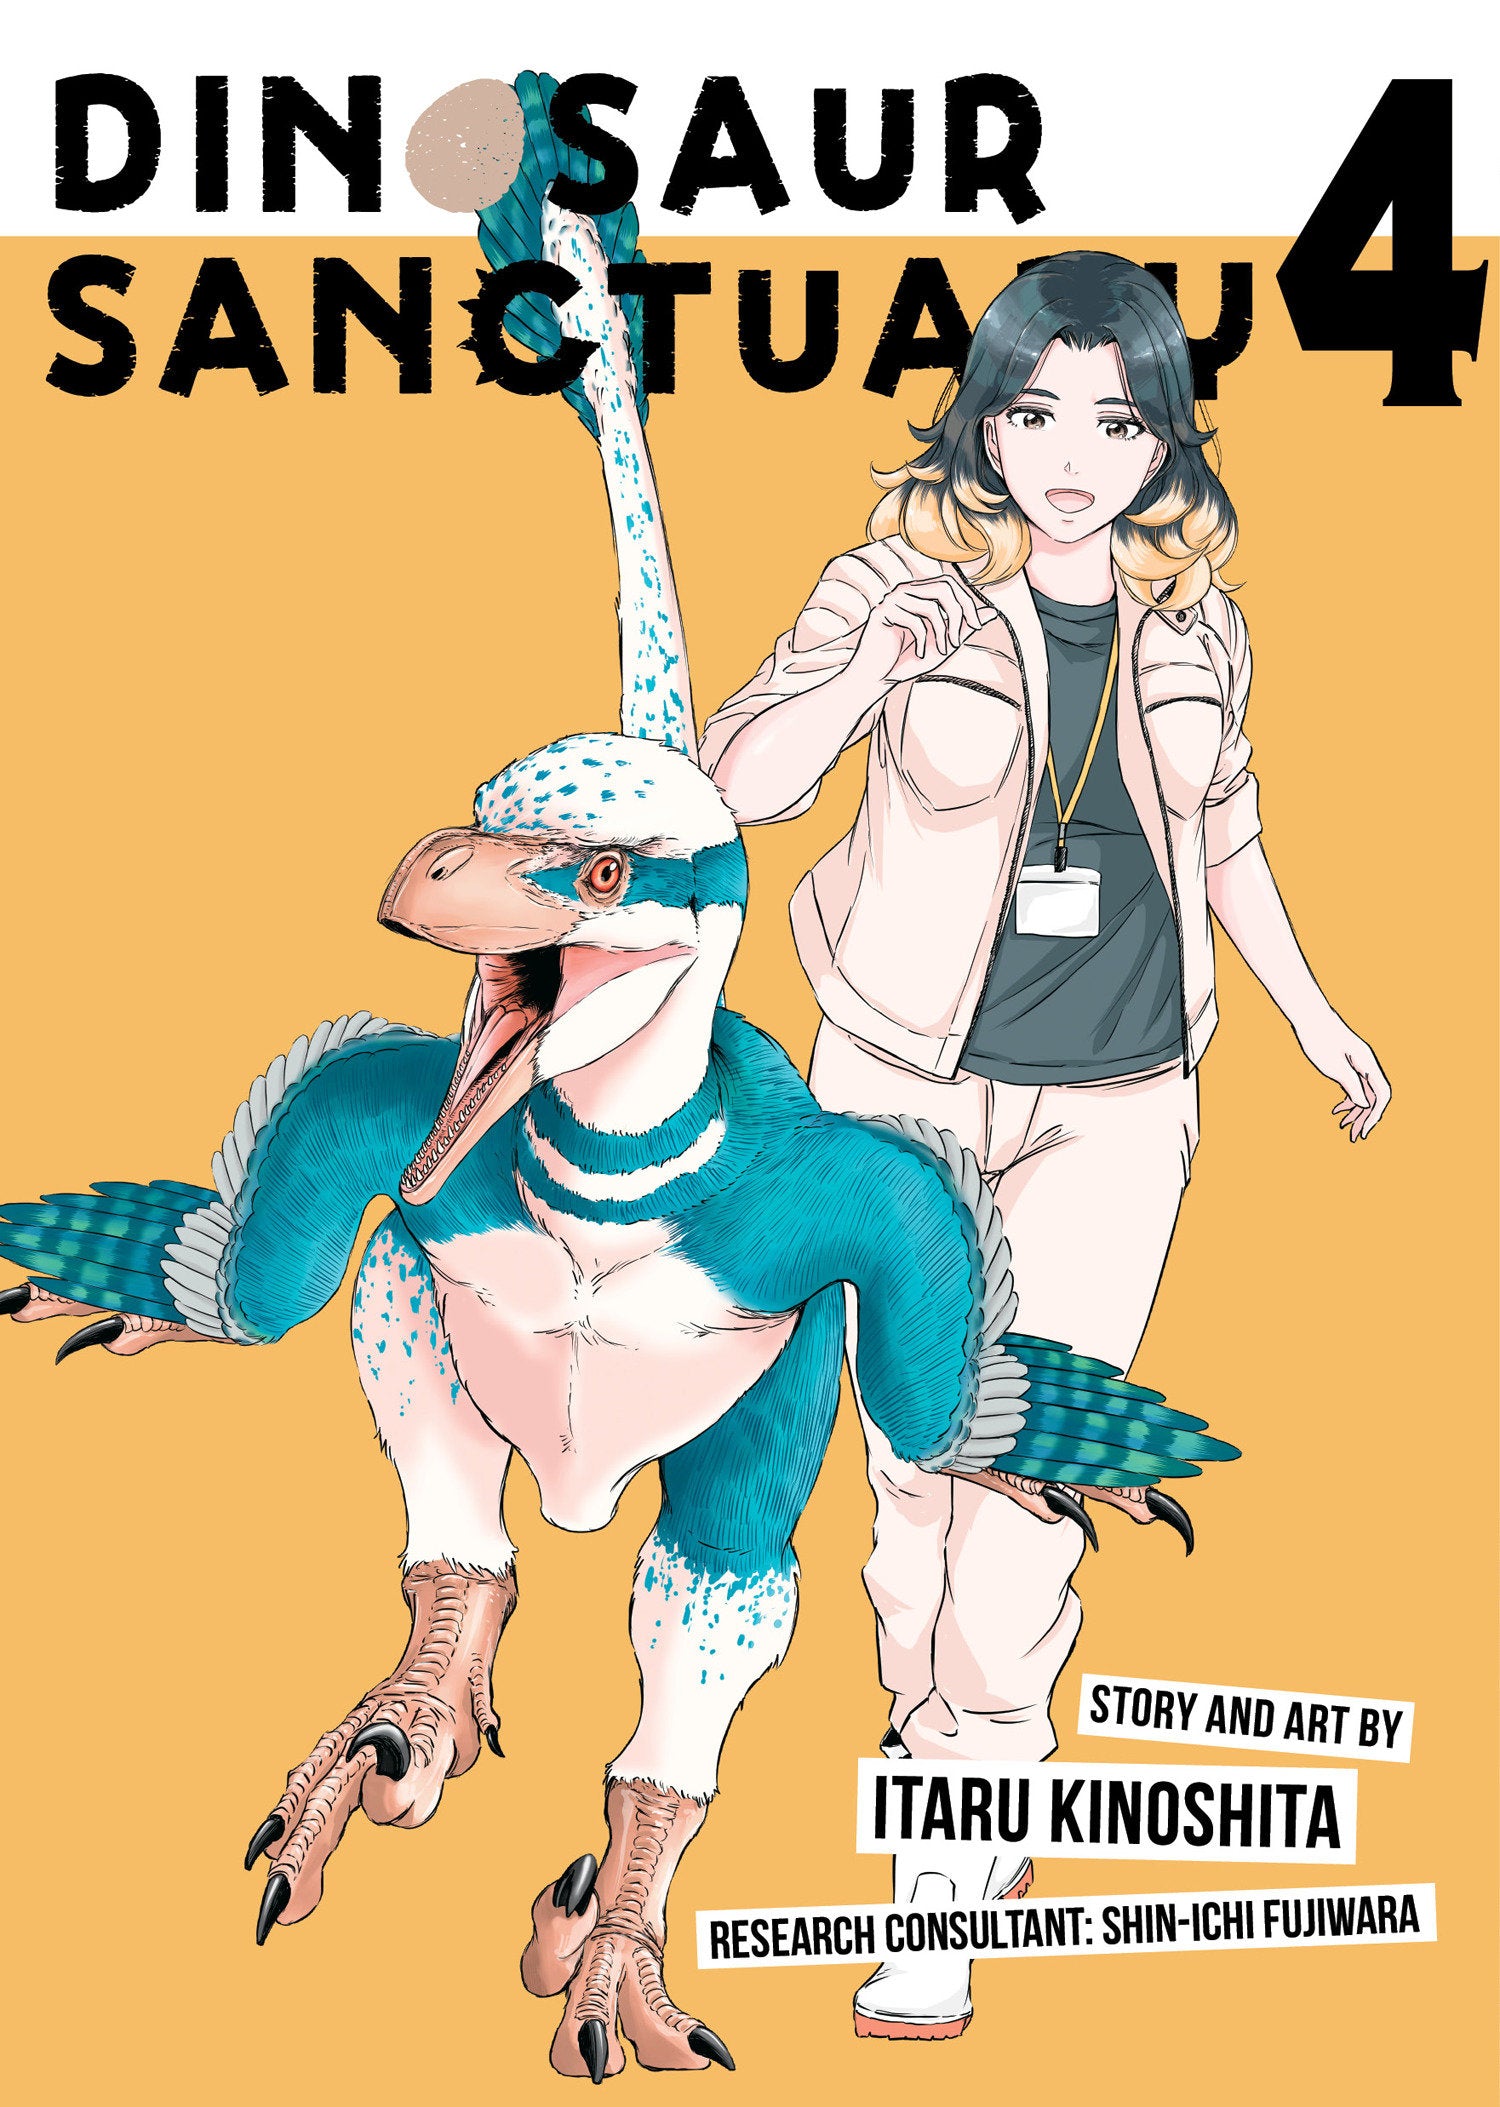 Dinosaur Sanctuary Volume. 4